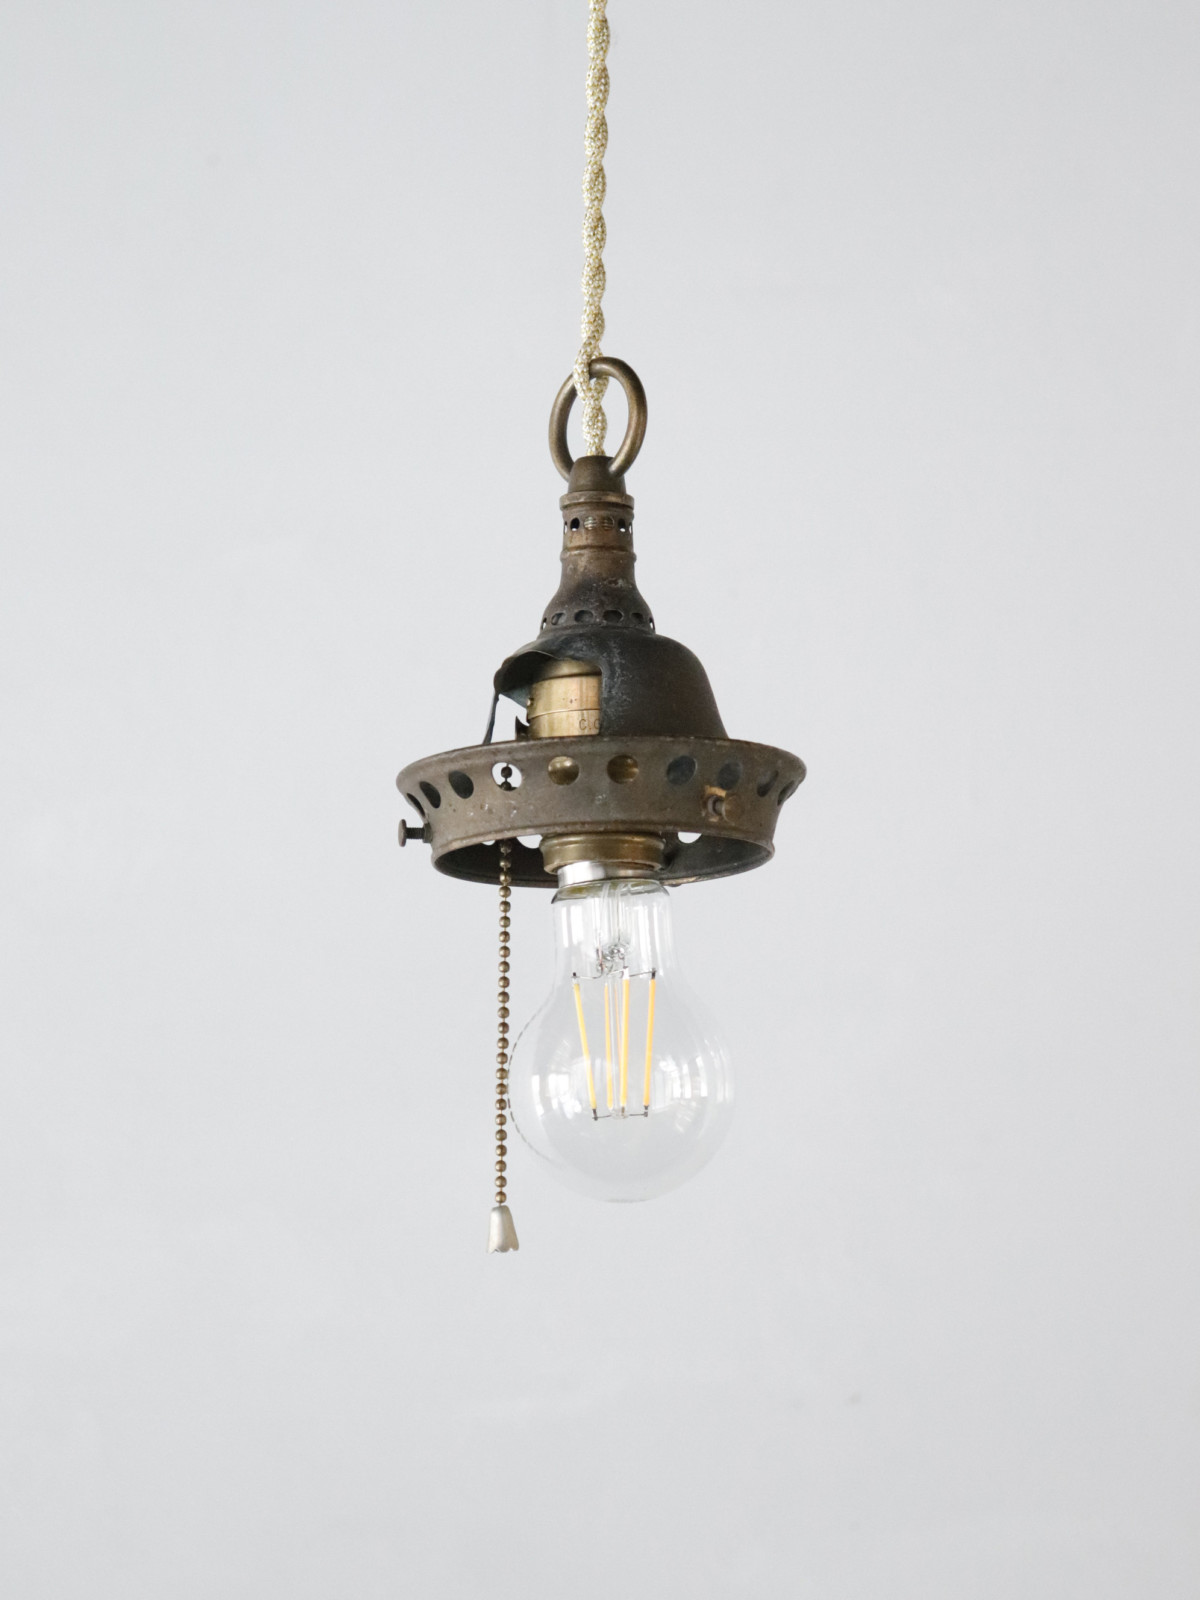 Gus lamp parts,pendant light,vintage,USA